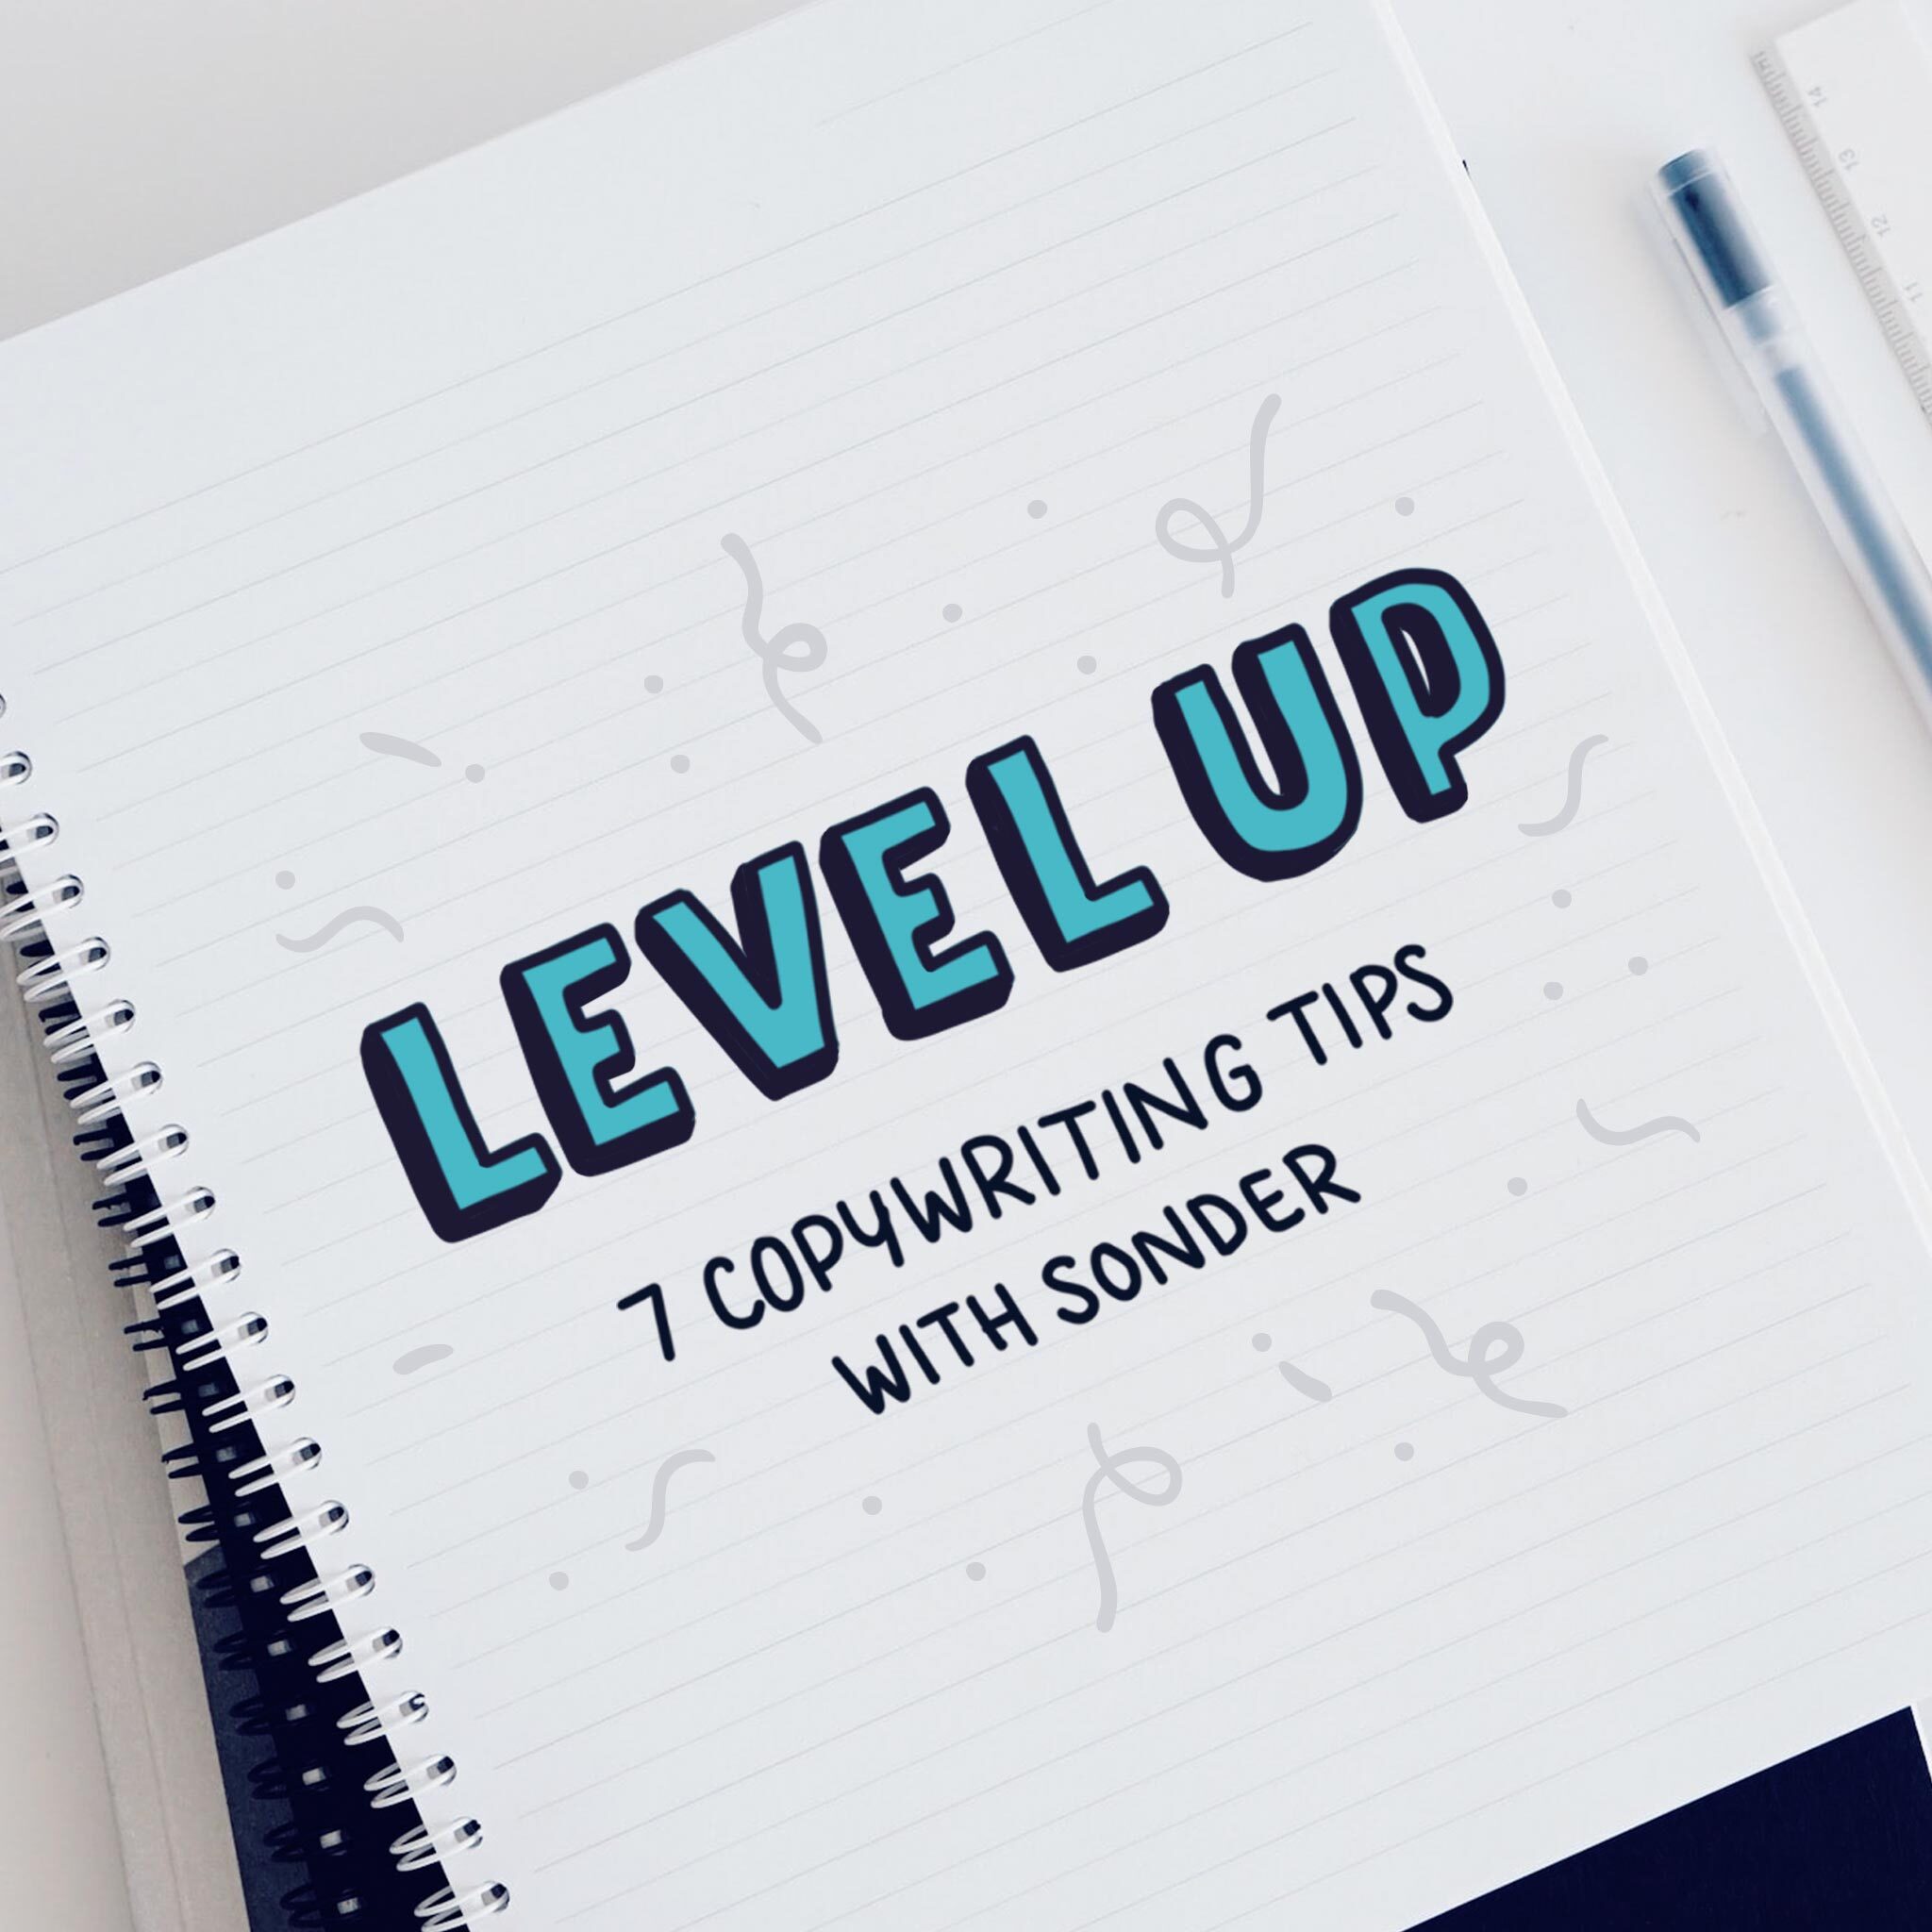 Level up 7 copywriting tips written on a notebook